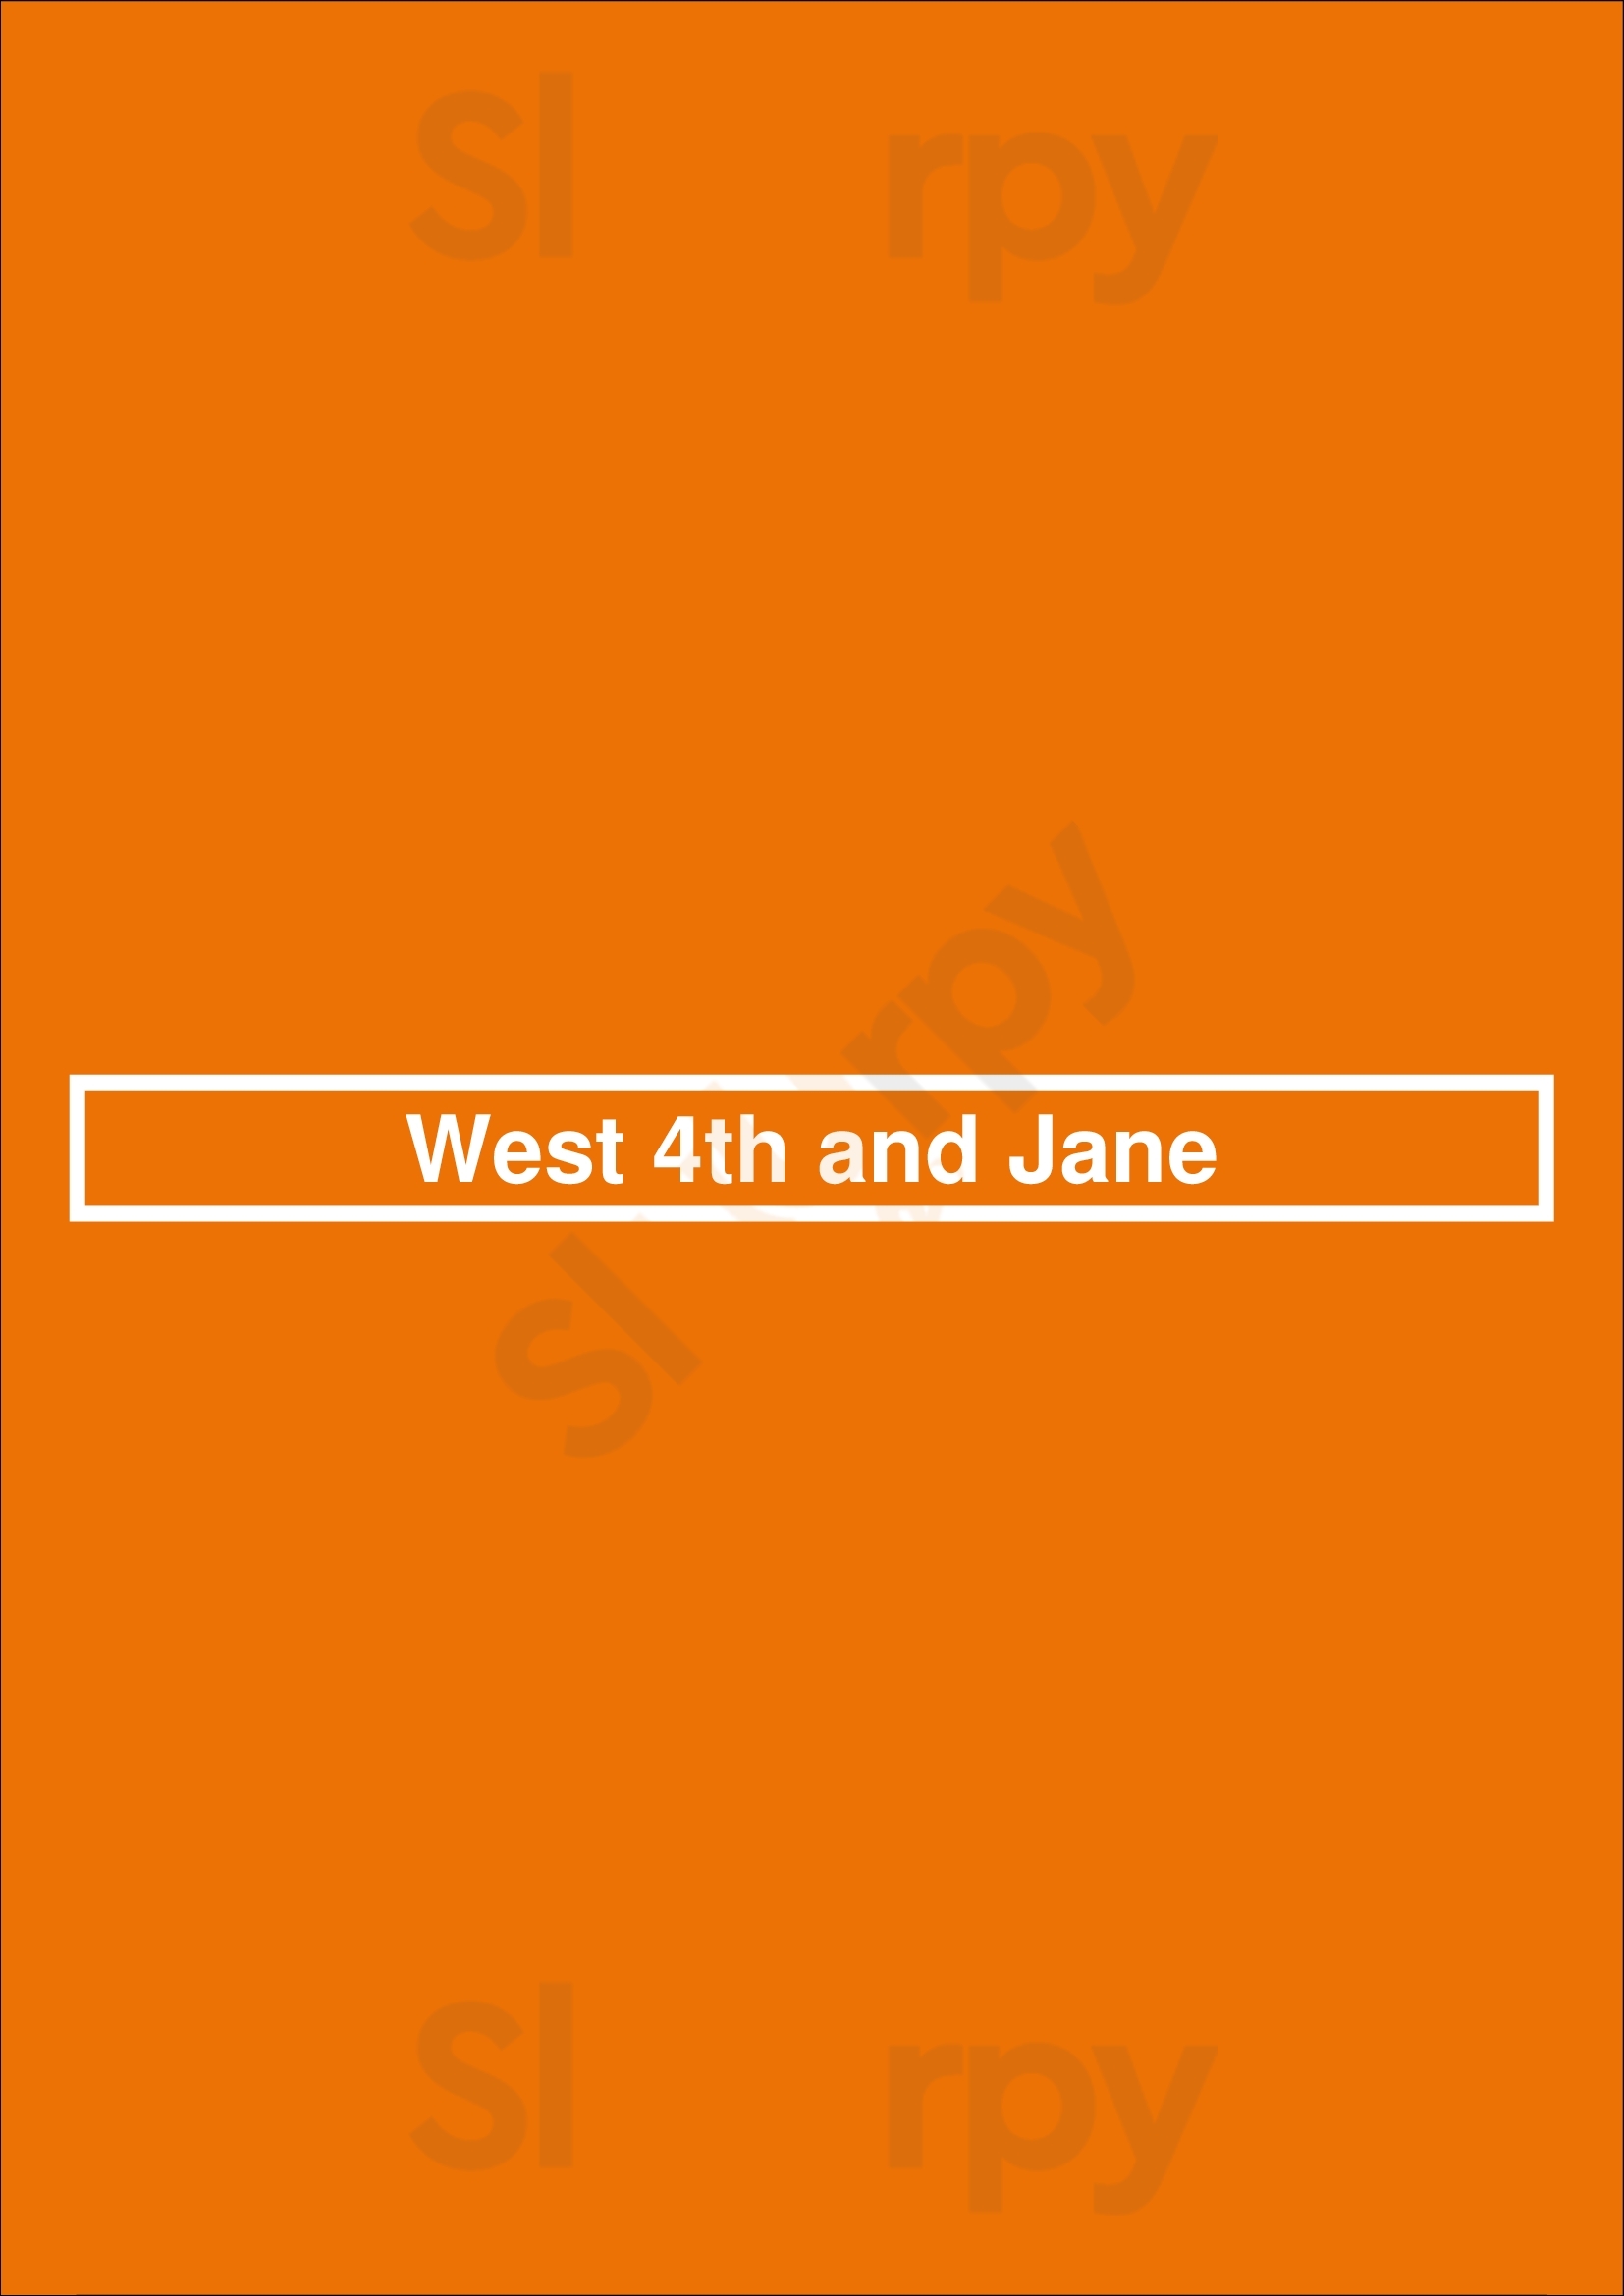 West 4th And Jane Santa Monica Menu - 1